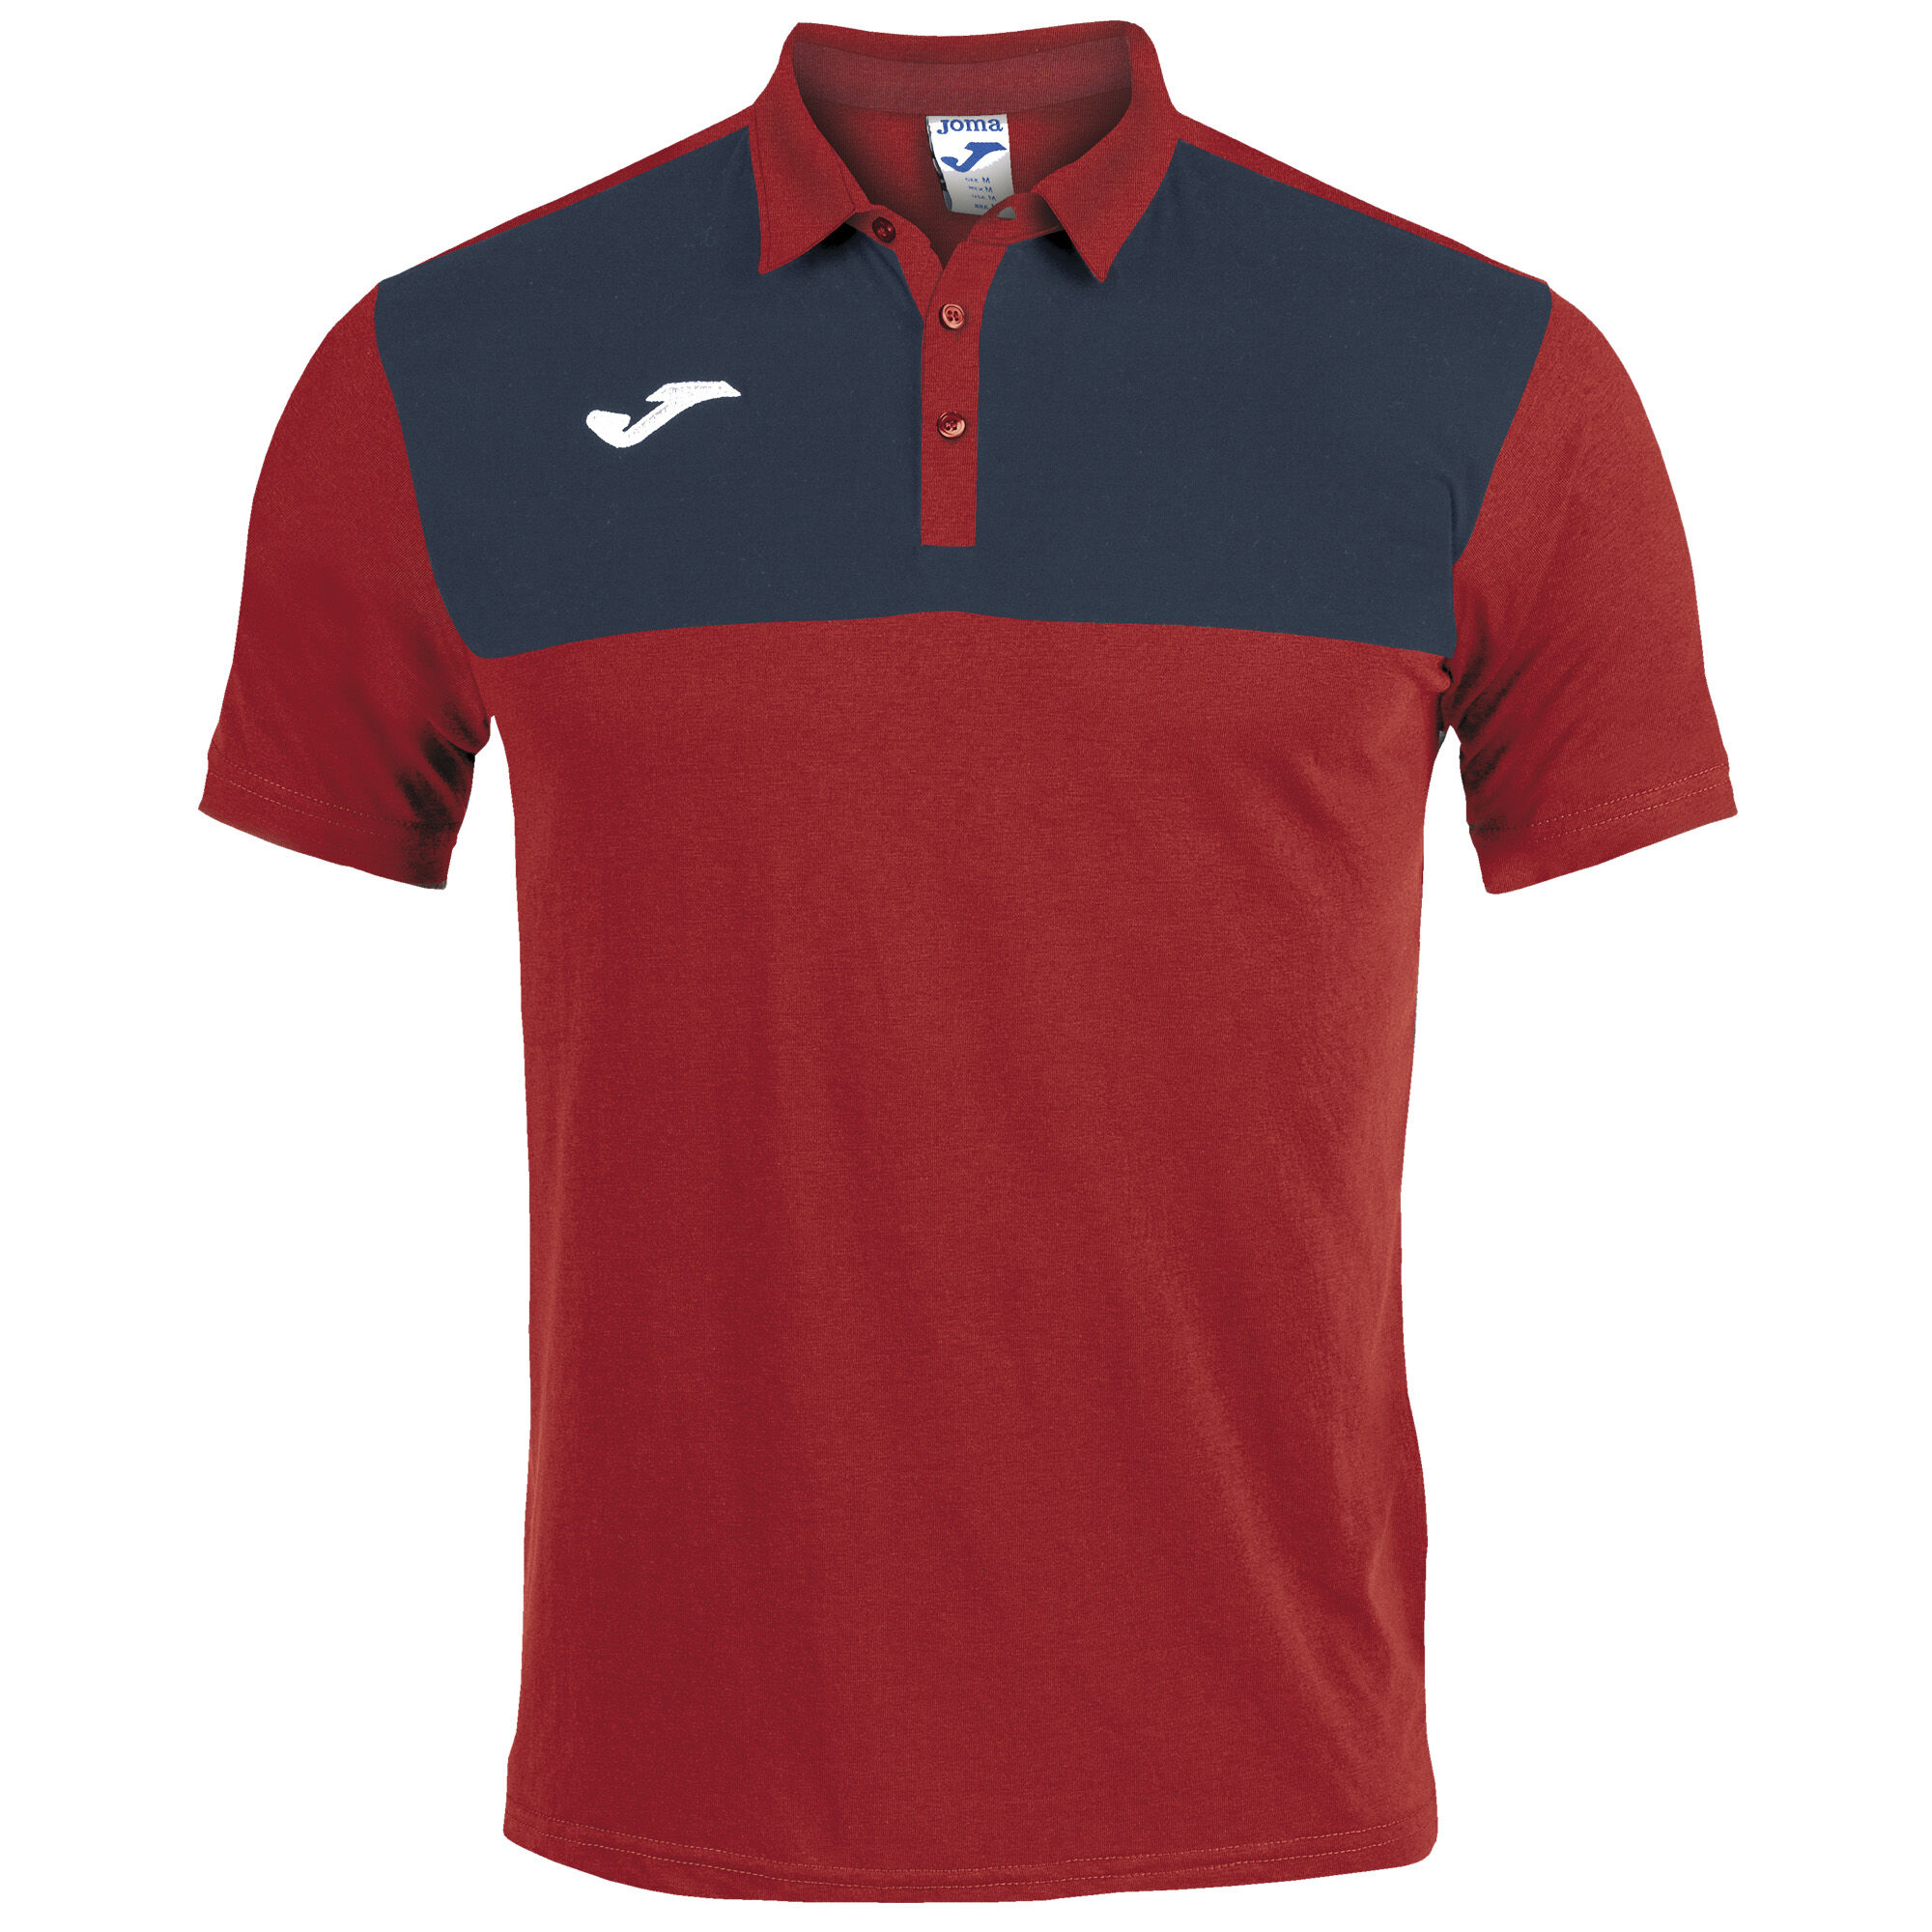 Polo shirt short-sleeve man Winner red navy blue